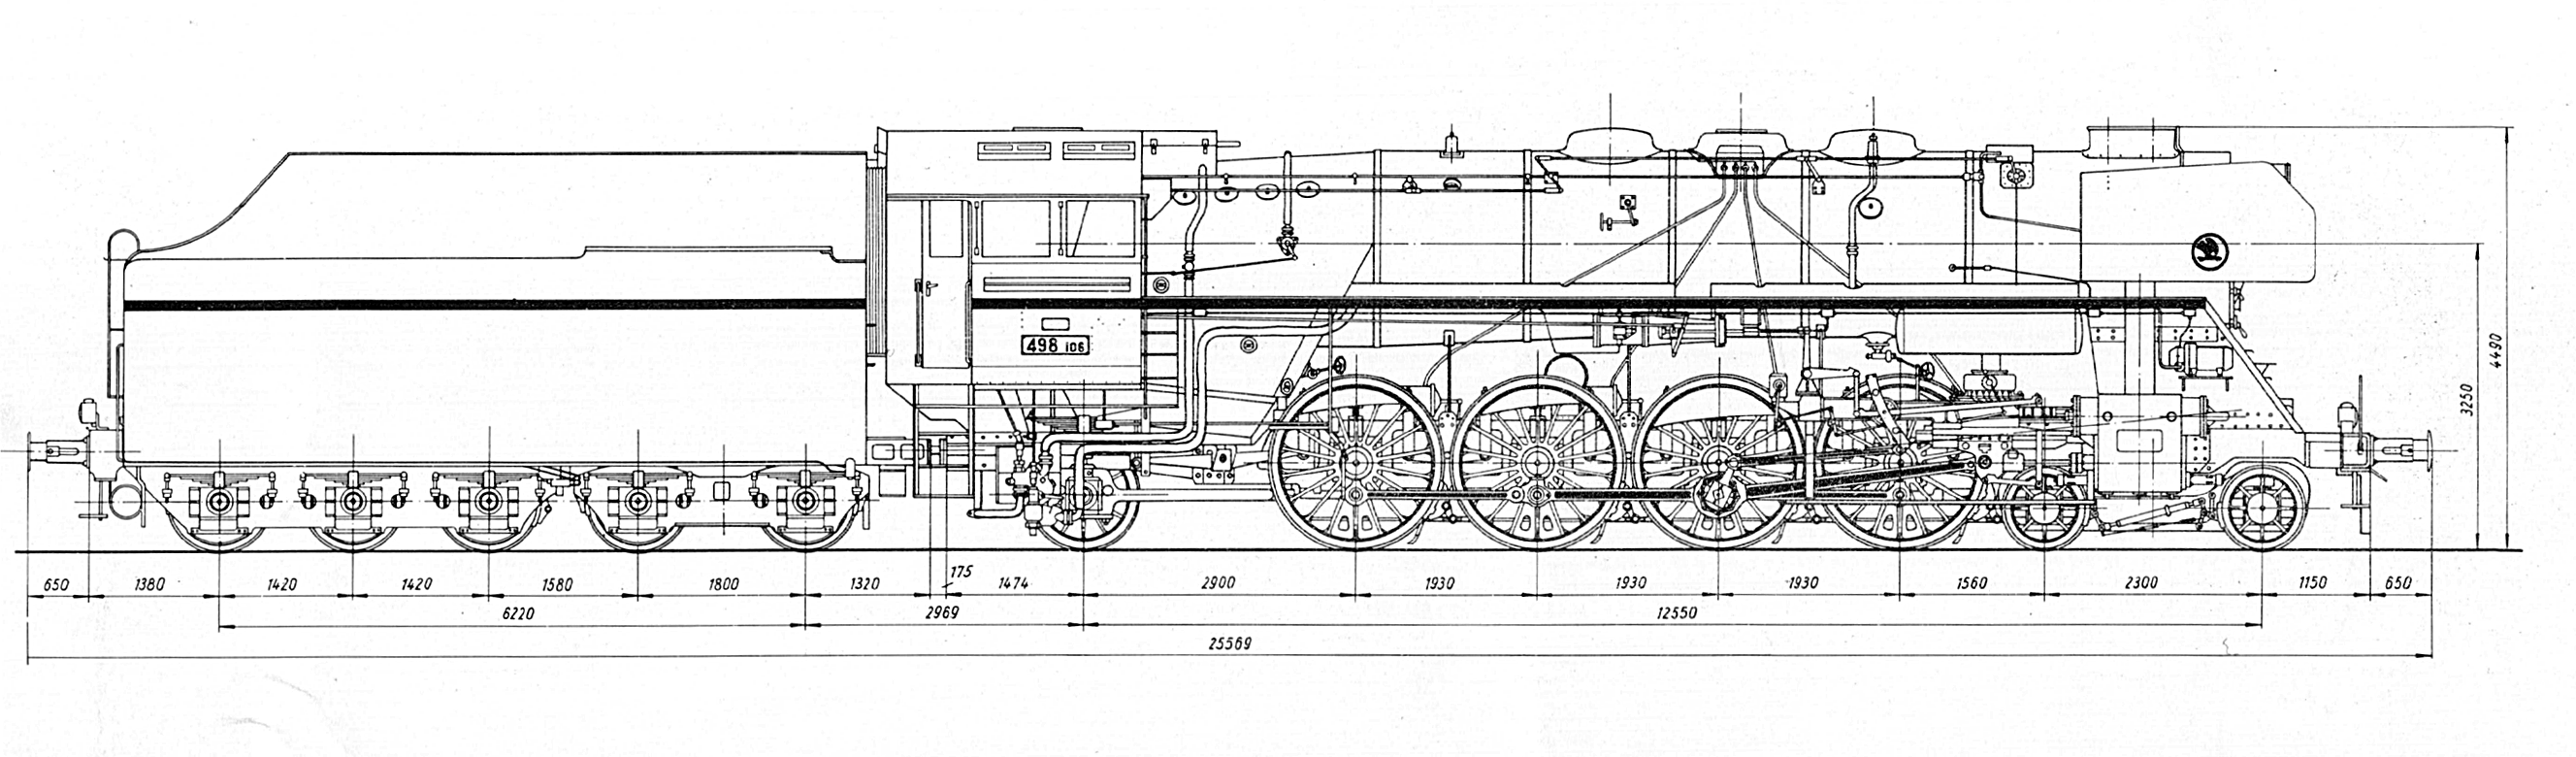 Схема паровоза 498.1